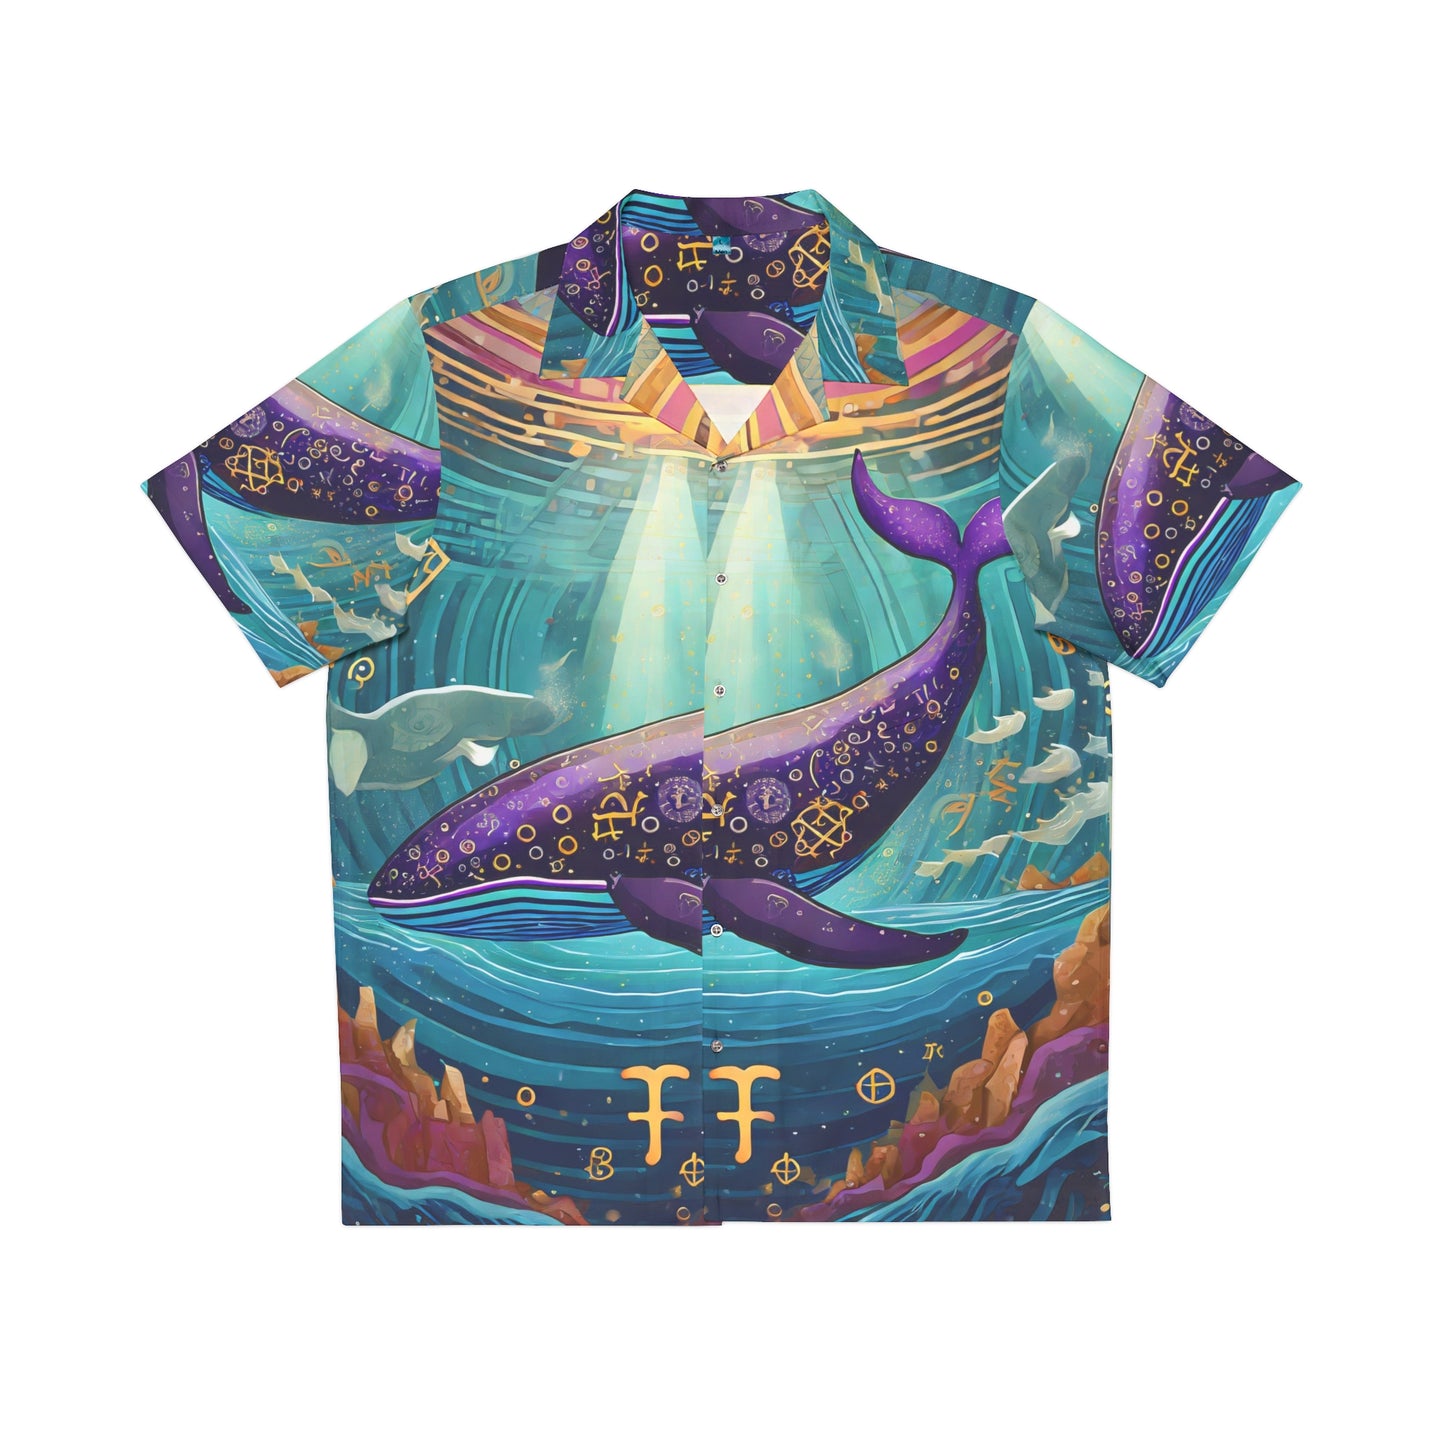 SteamPunk Orca Fantasy Unisex Adult Hawaiian Shirt (AOP)